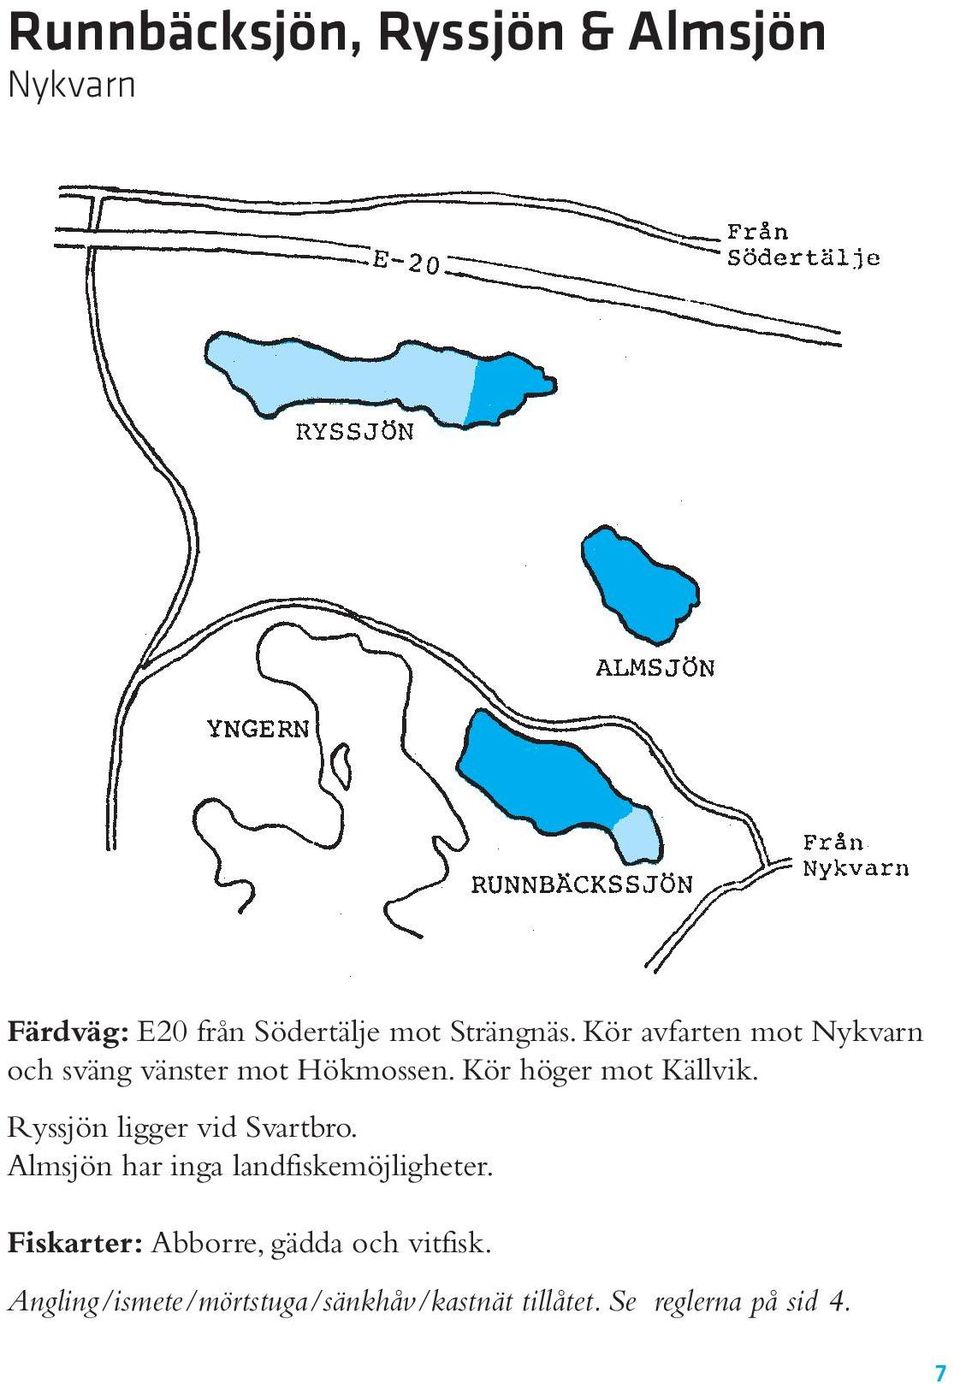 Ryssjön ligger vid Svartbro. Almsjön har inga landfiskemöjligheter.